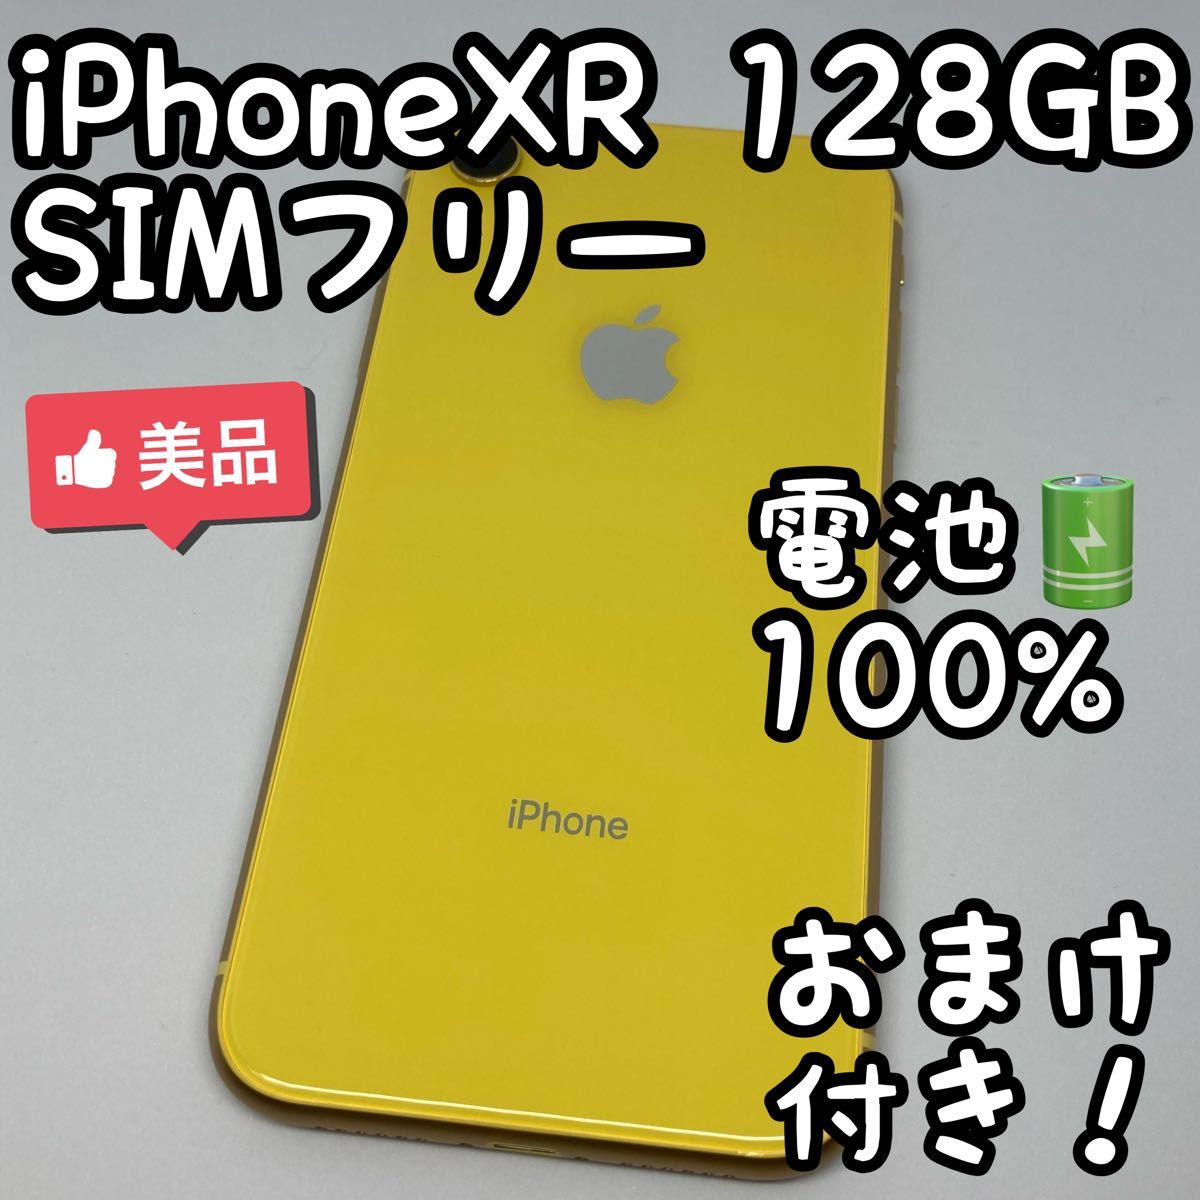 iPhone XR Yellow 128 GB SIMフリー 本体 _313｜PayPayフリマ